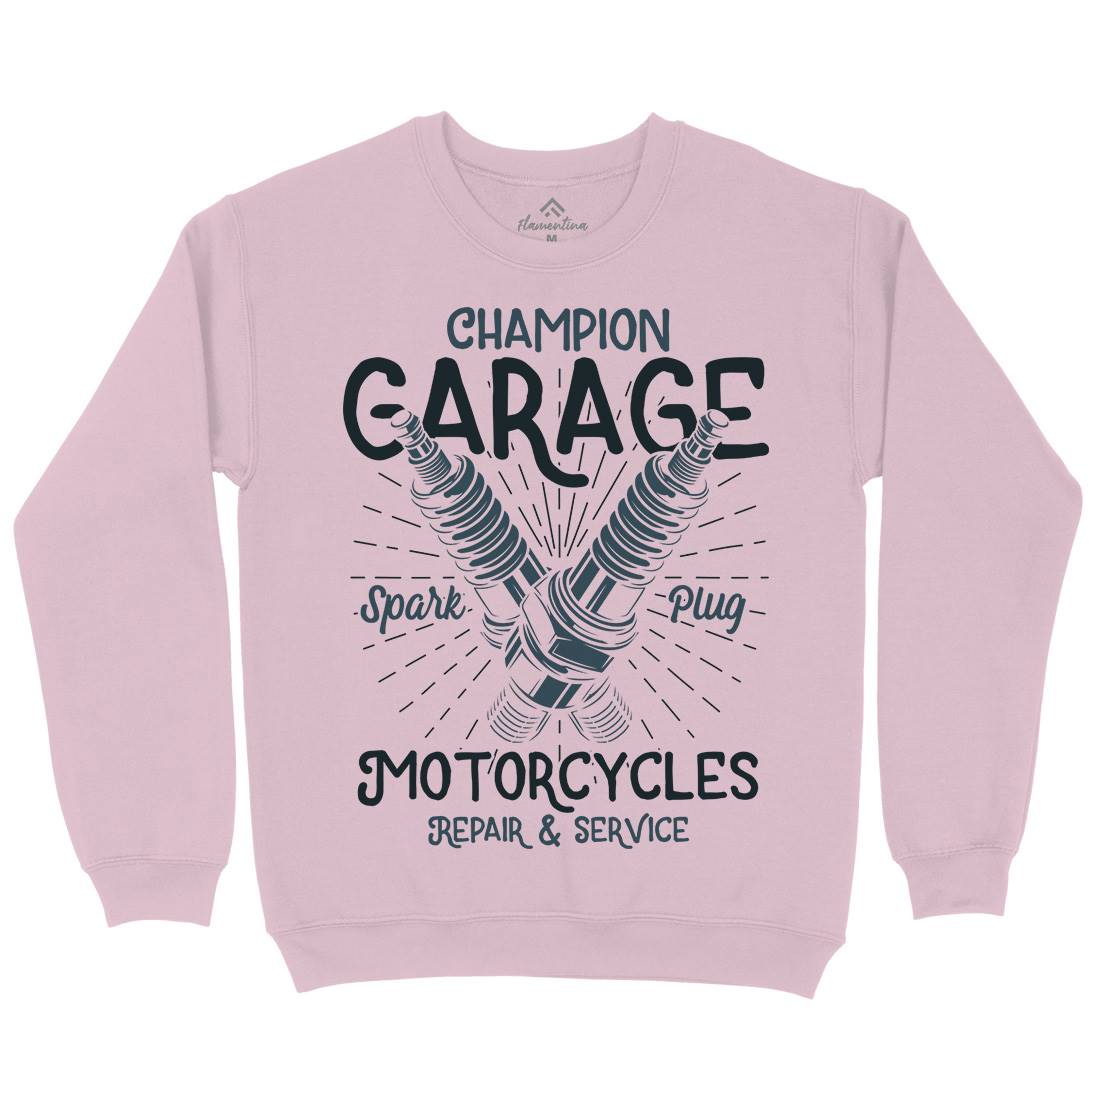 Champion Garage Kids Crew Neck Sweatshirt Motorcycles B835